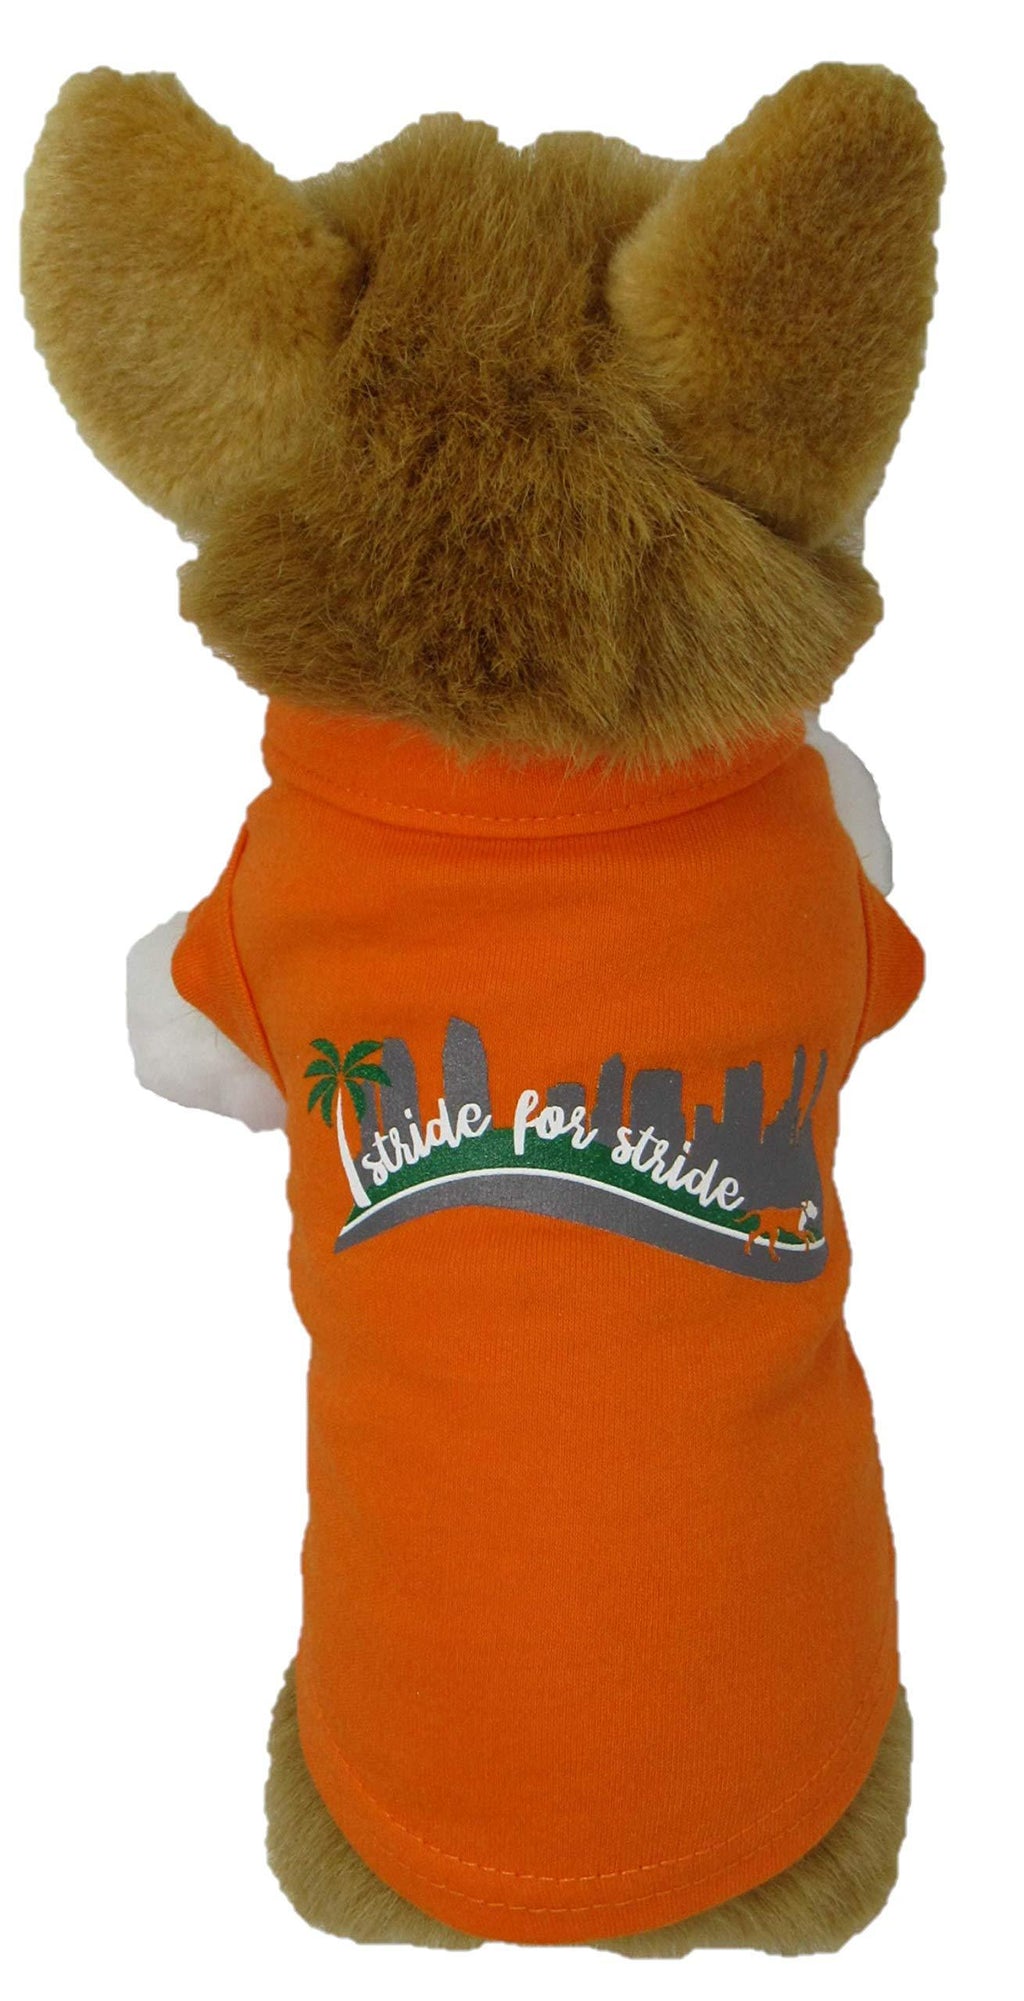 [Australia] - Fetch the Sun Dog’s Stride for Stride Running T-Shirt S Orange 